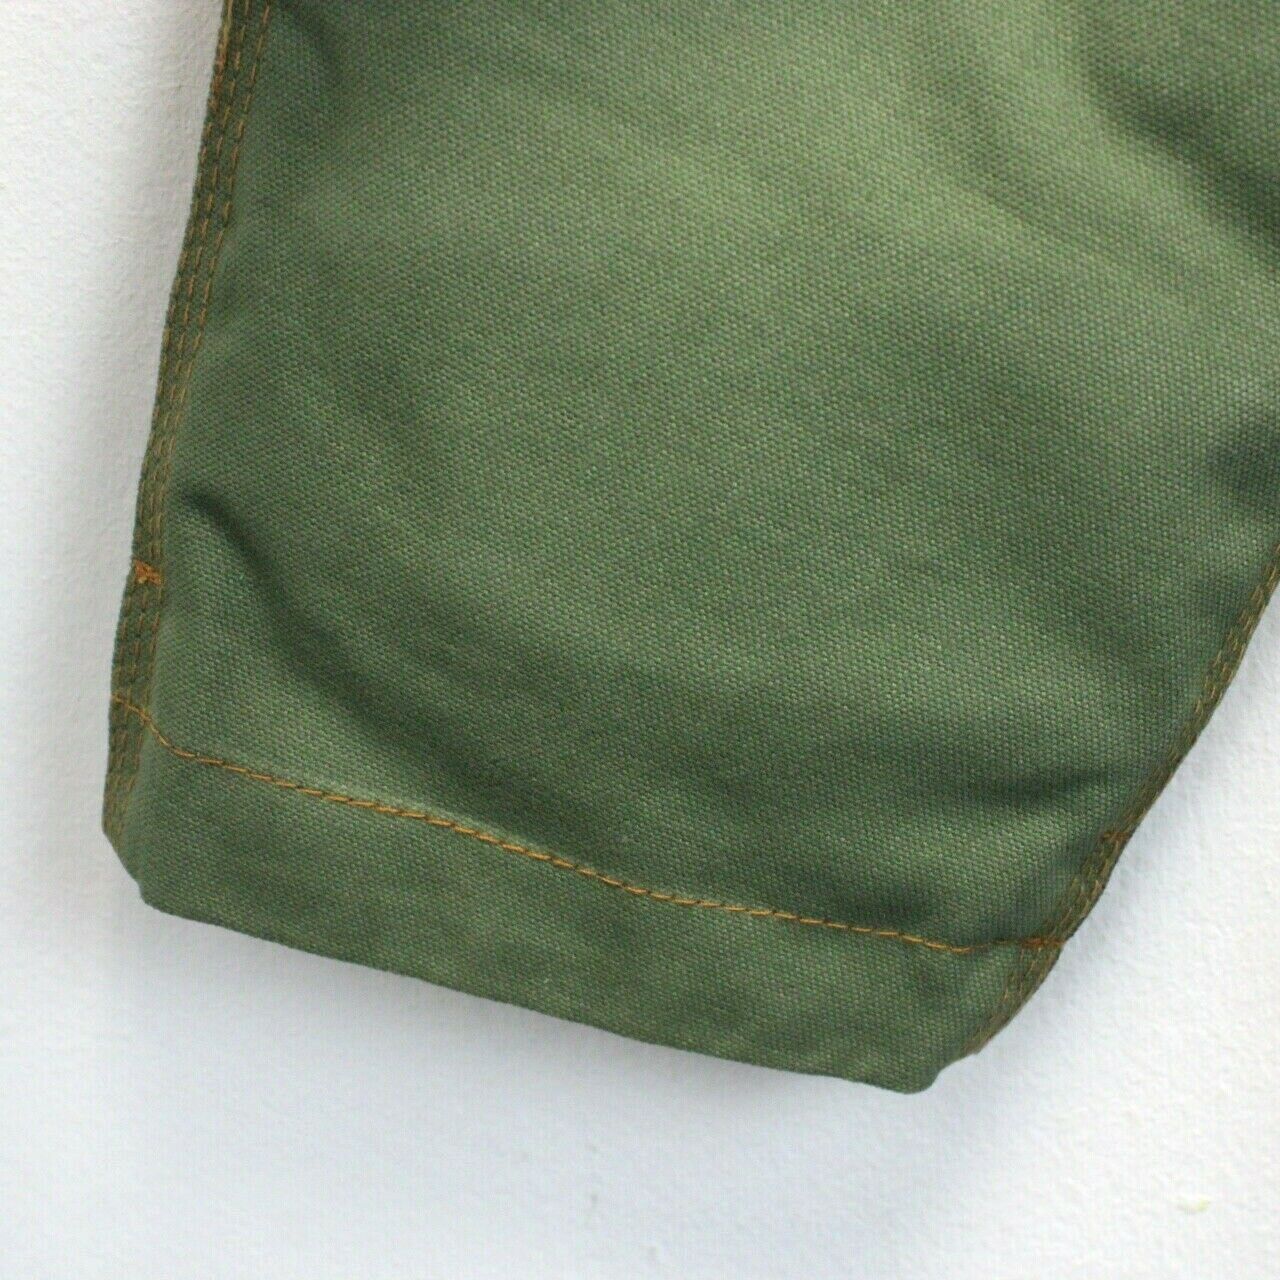 CARHARTT Reworked Detroit Jacket Multicolour | Large